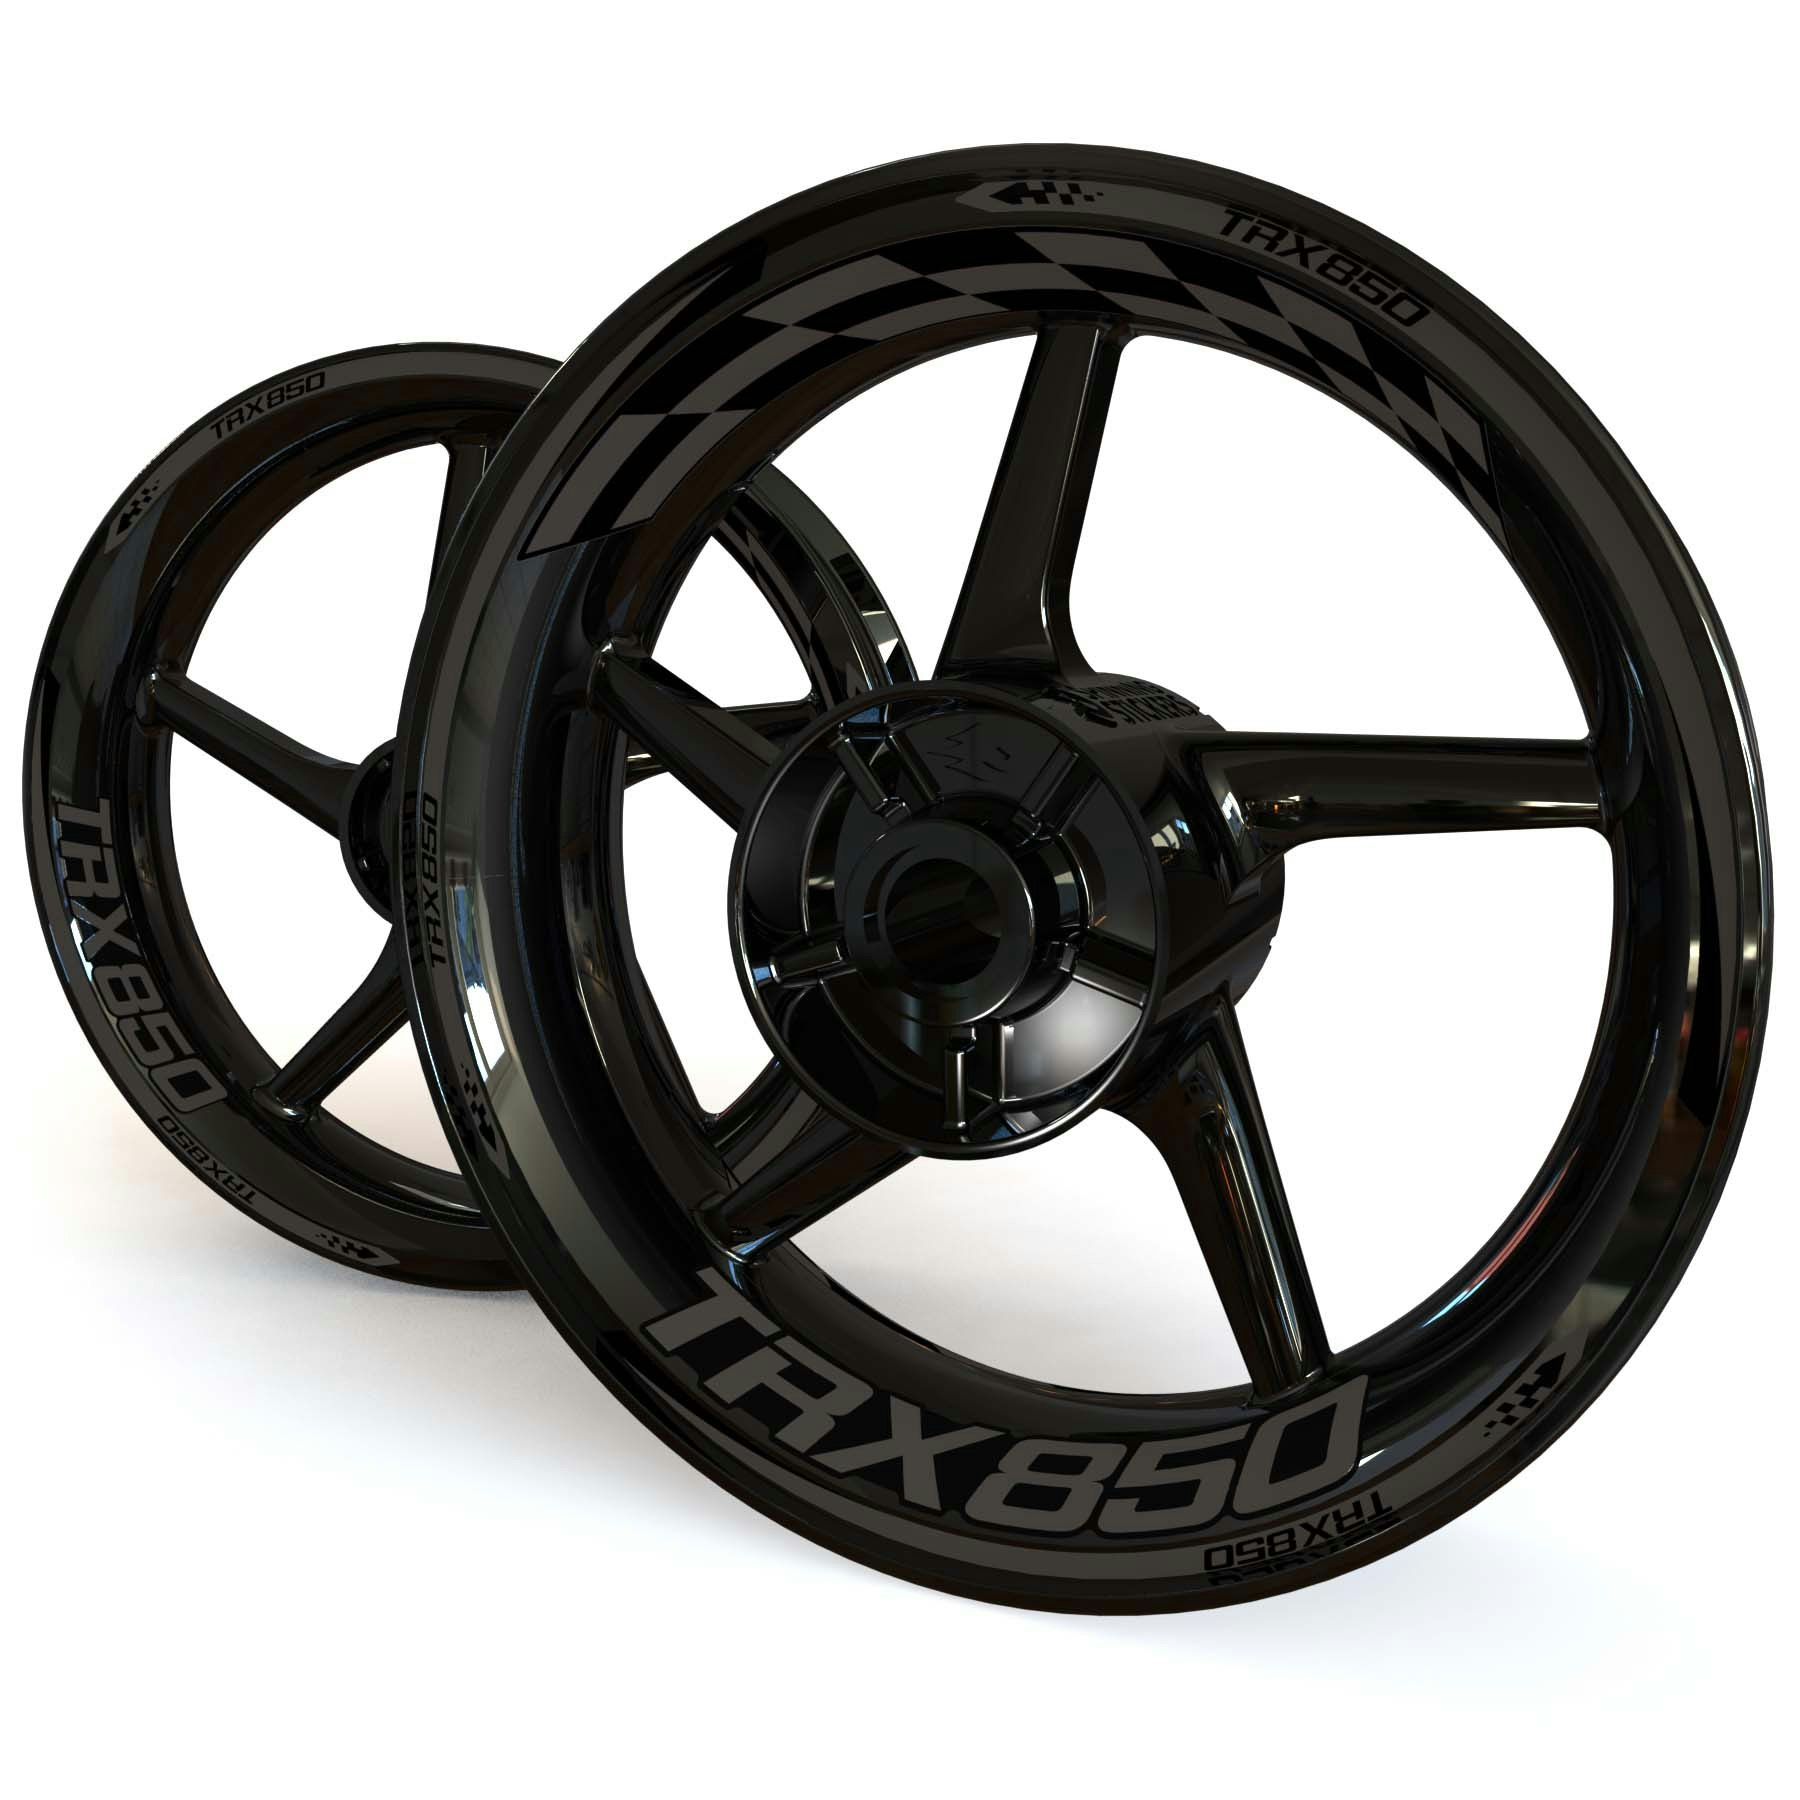 Adhesivos para ruedas Yamaha TRX850 - "Checker" Diseño estándar